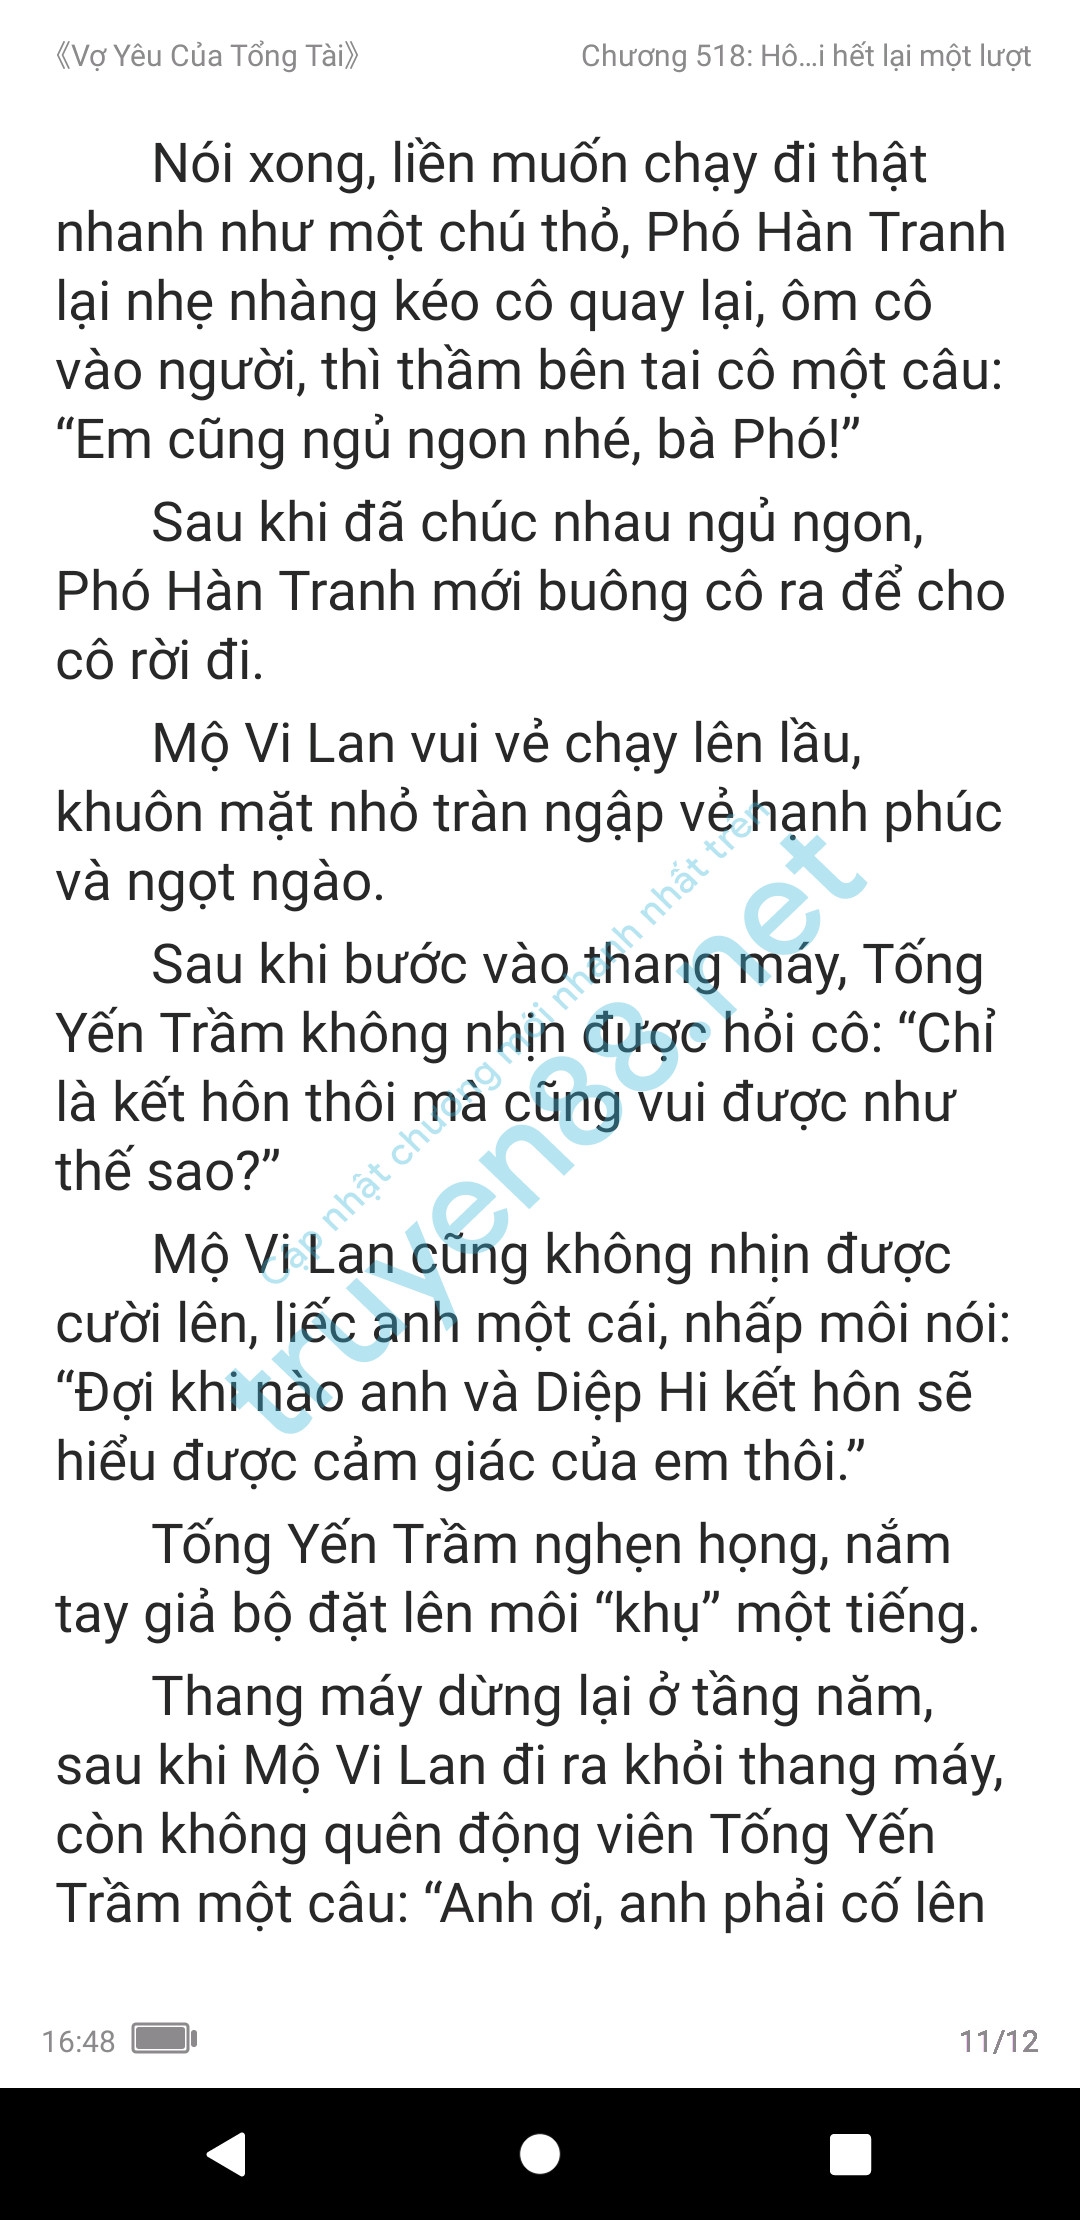 vo-yeu-cua-tong-tai-mo-vi-lan--pho-han-tranh-528-0